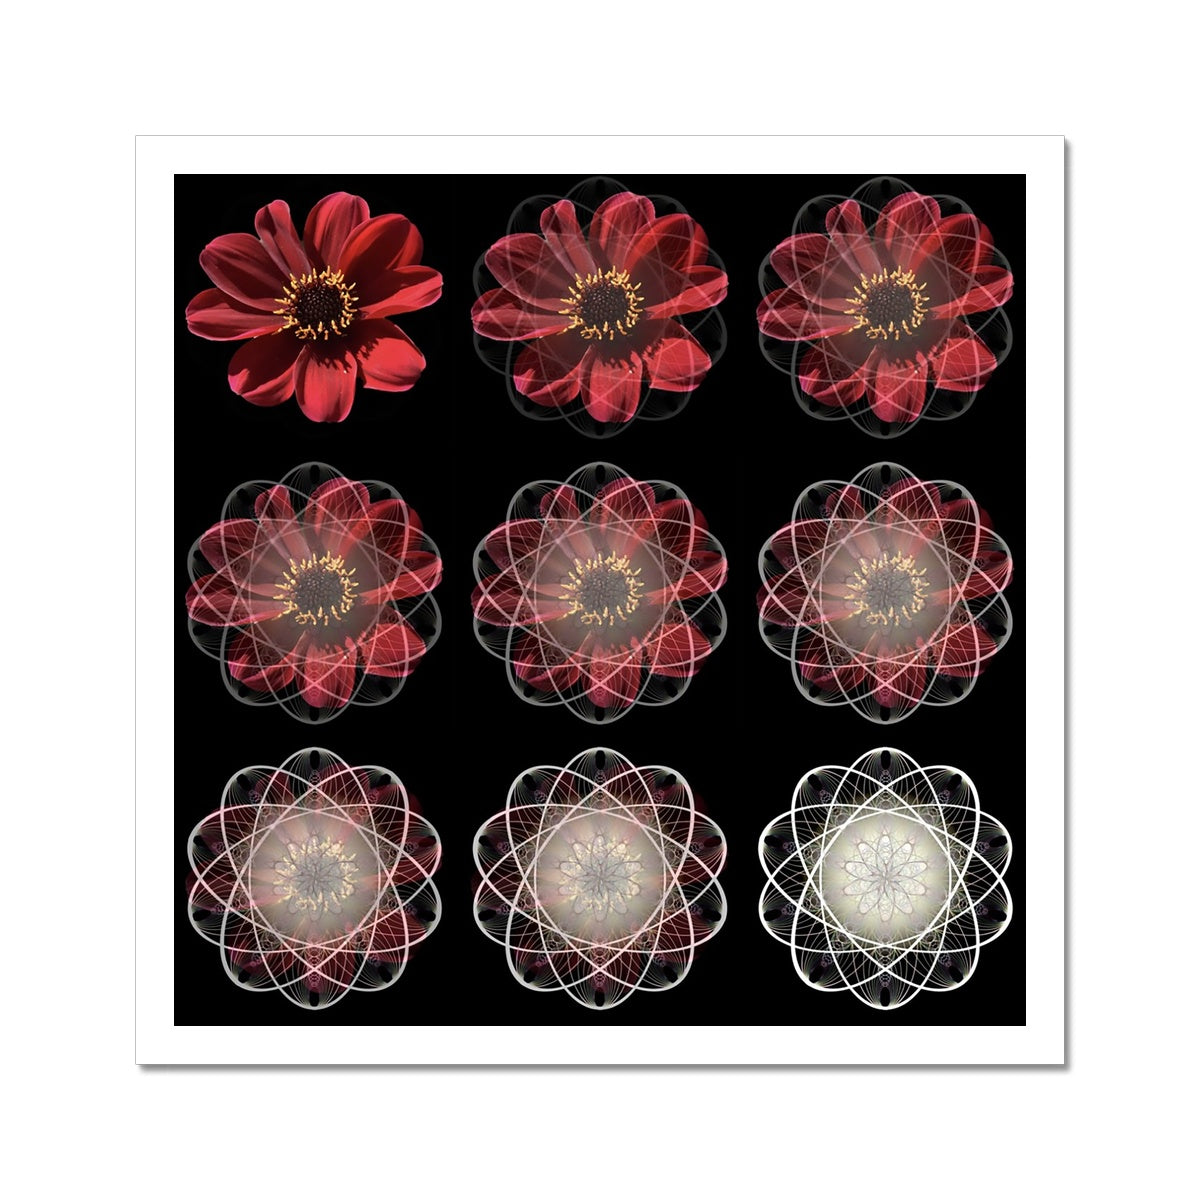 The Geometry of Flowers 4 C-Type Print